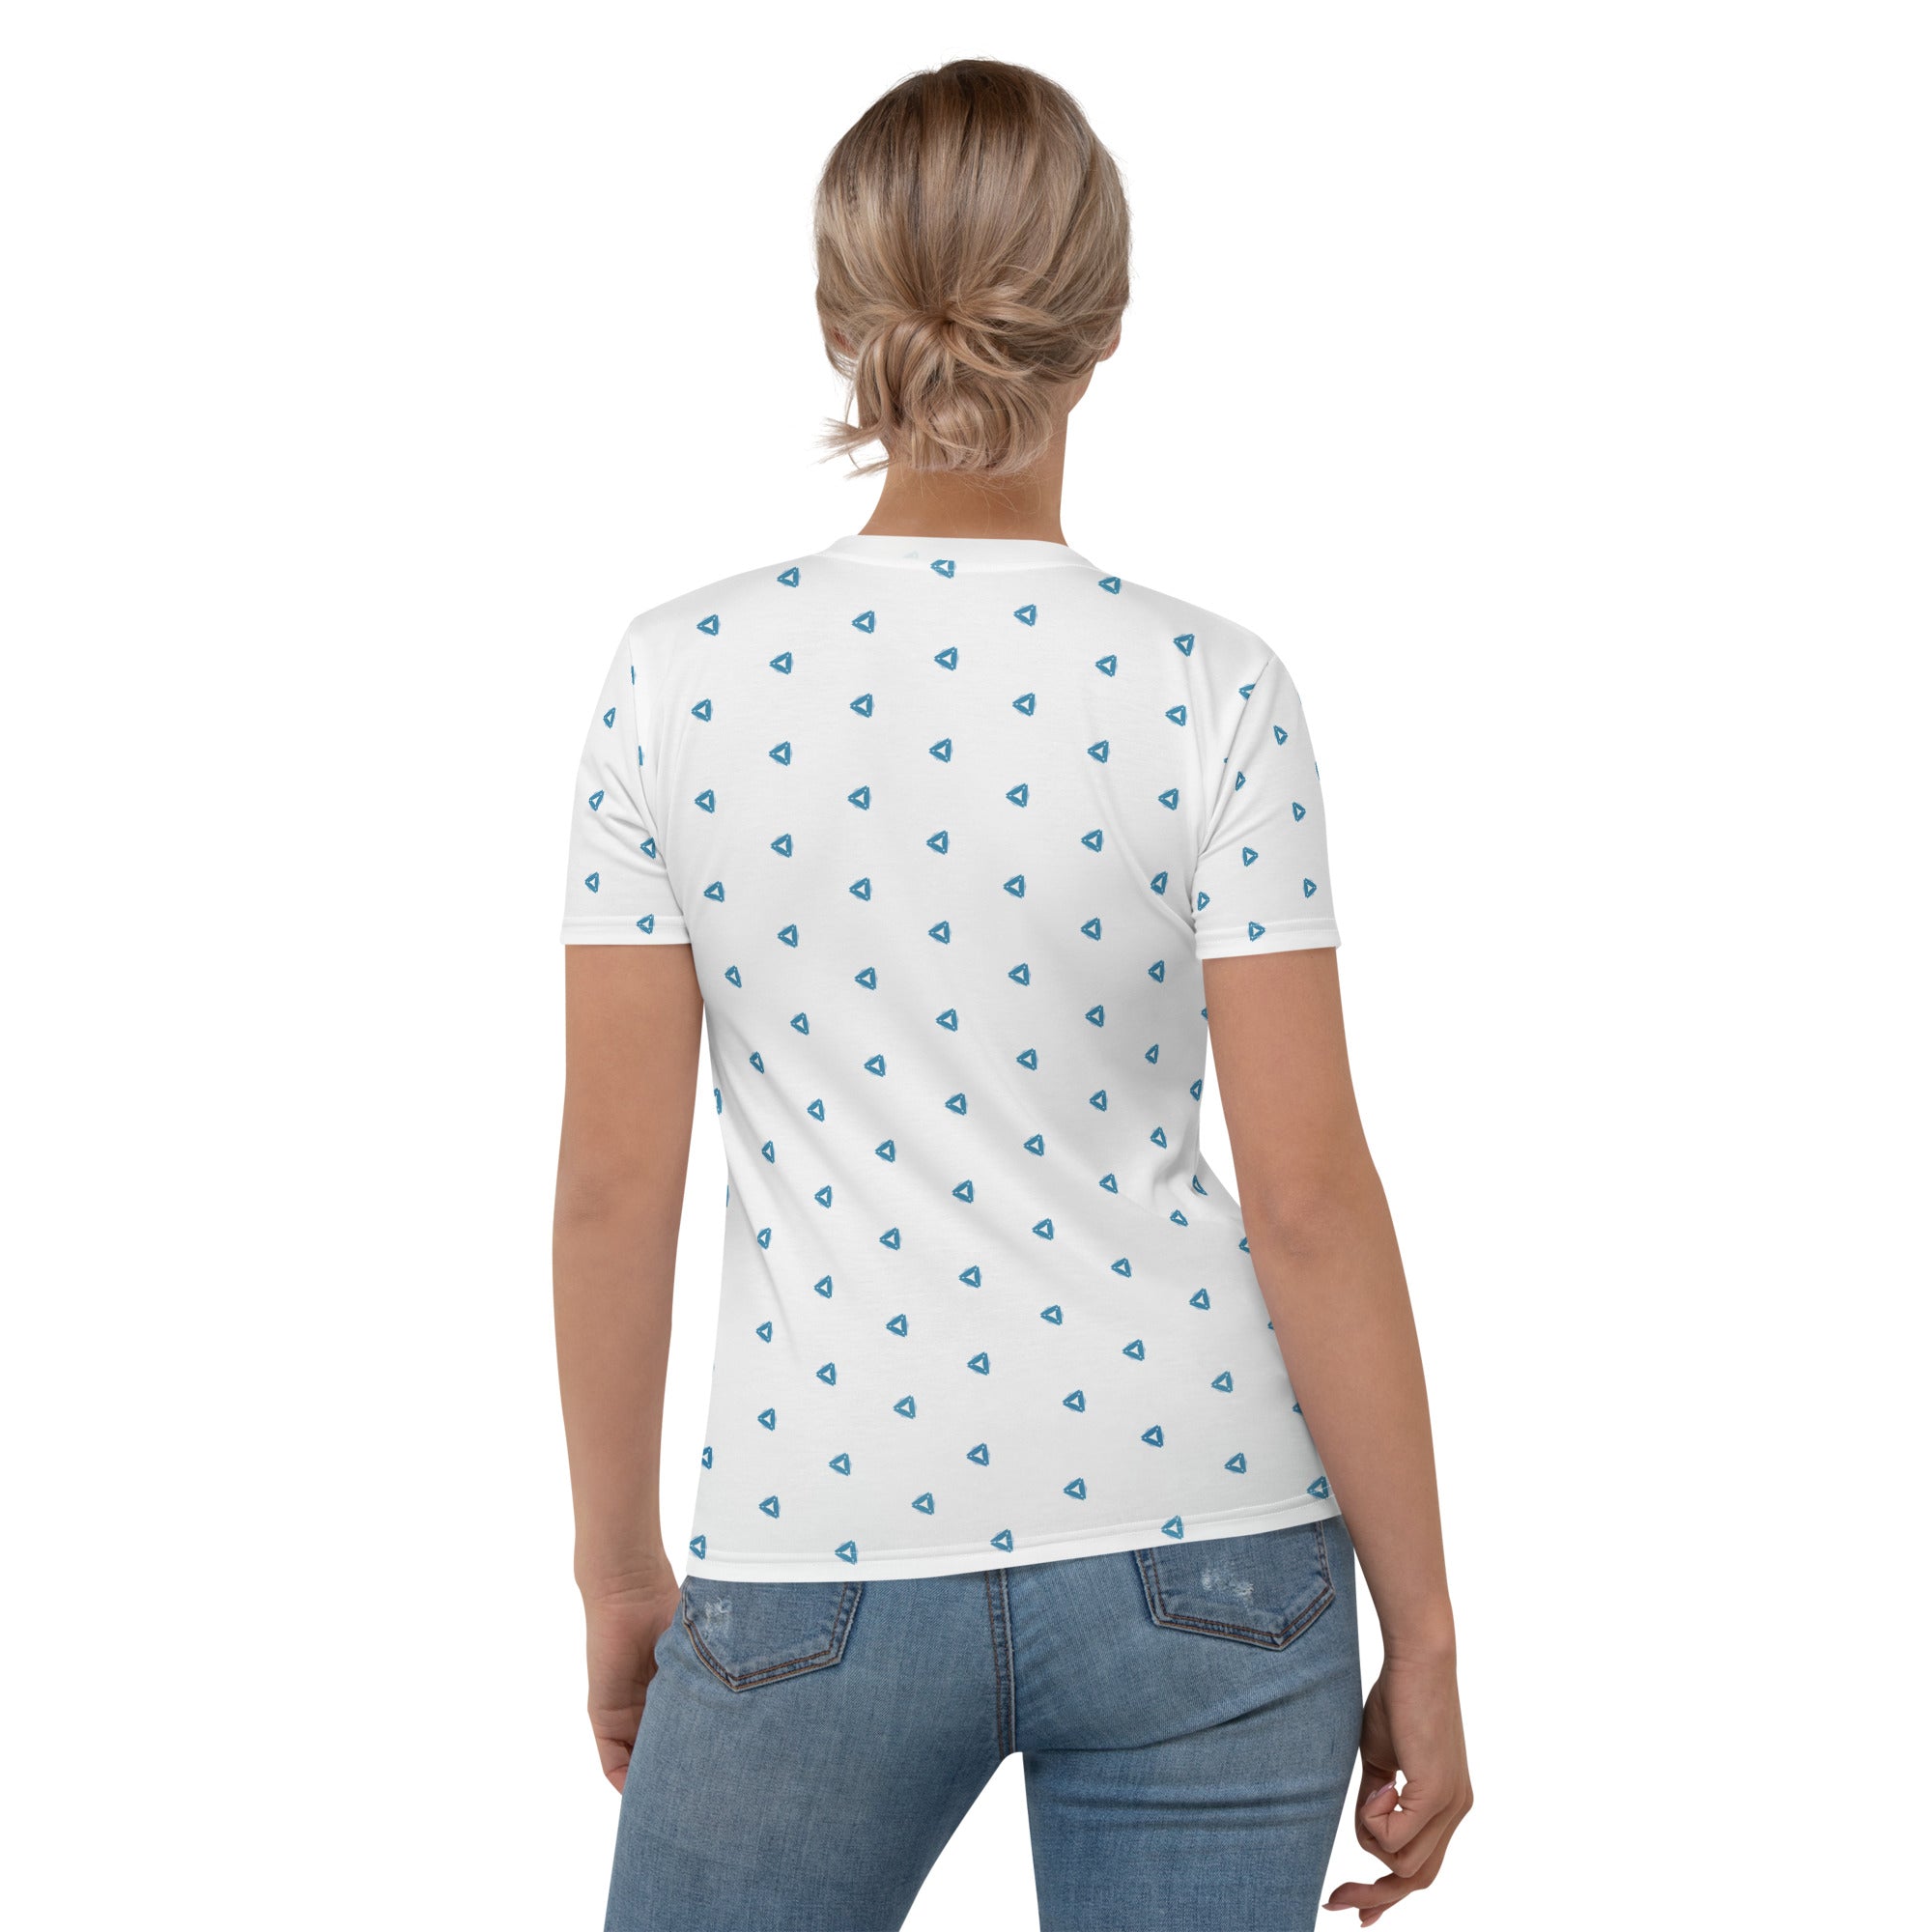 Stylish Lunar Moth Magic T-Shirt for women.